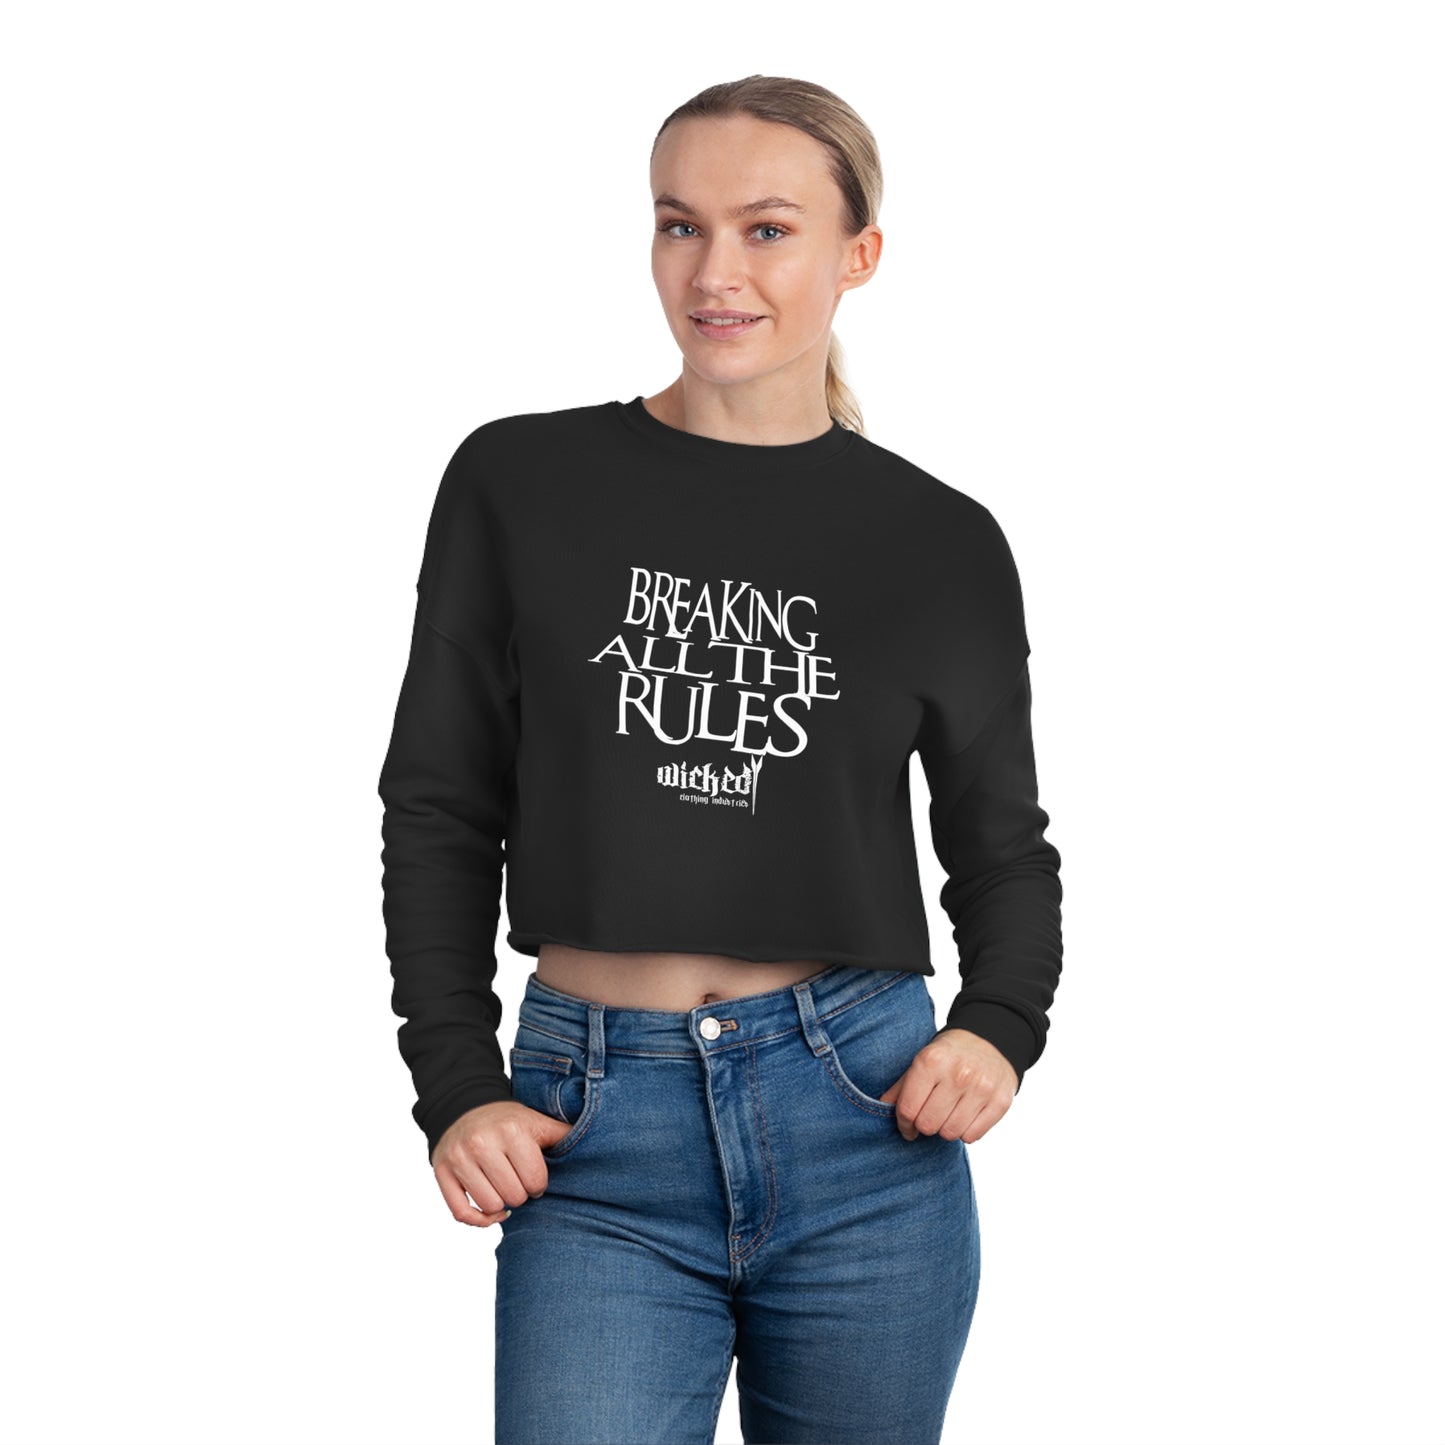 Breaking All The Rules /Women's Cropped Sweatshirt